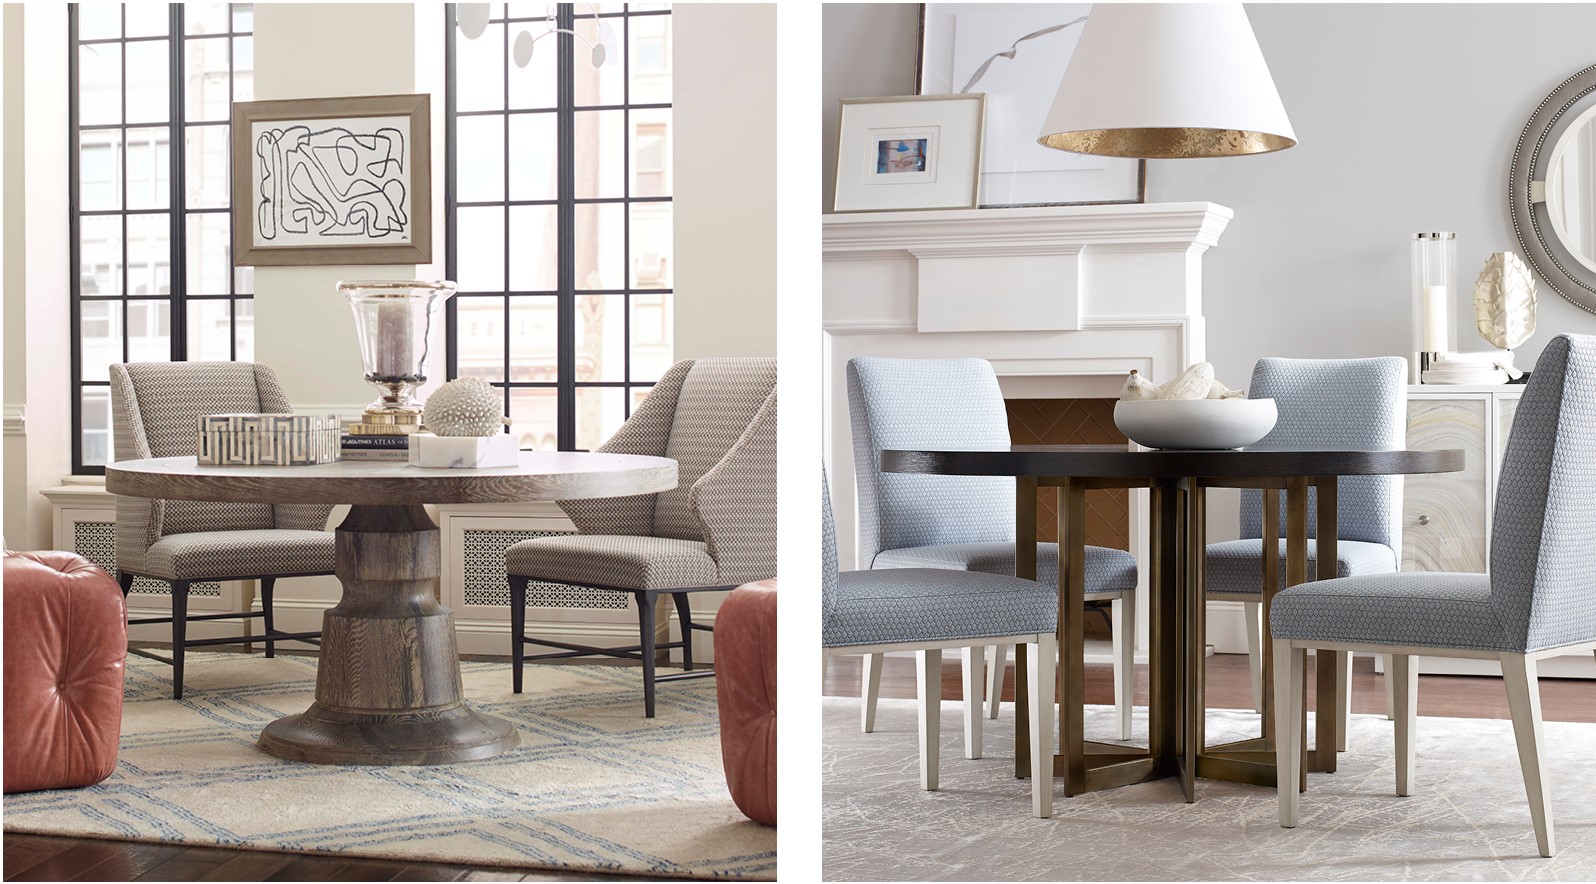 Make it Yours Dining Pedestal Tables - Vanguard Furniture